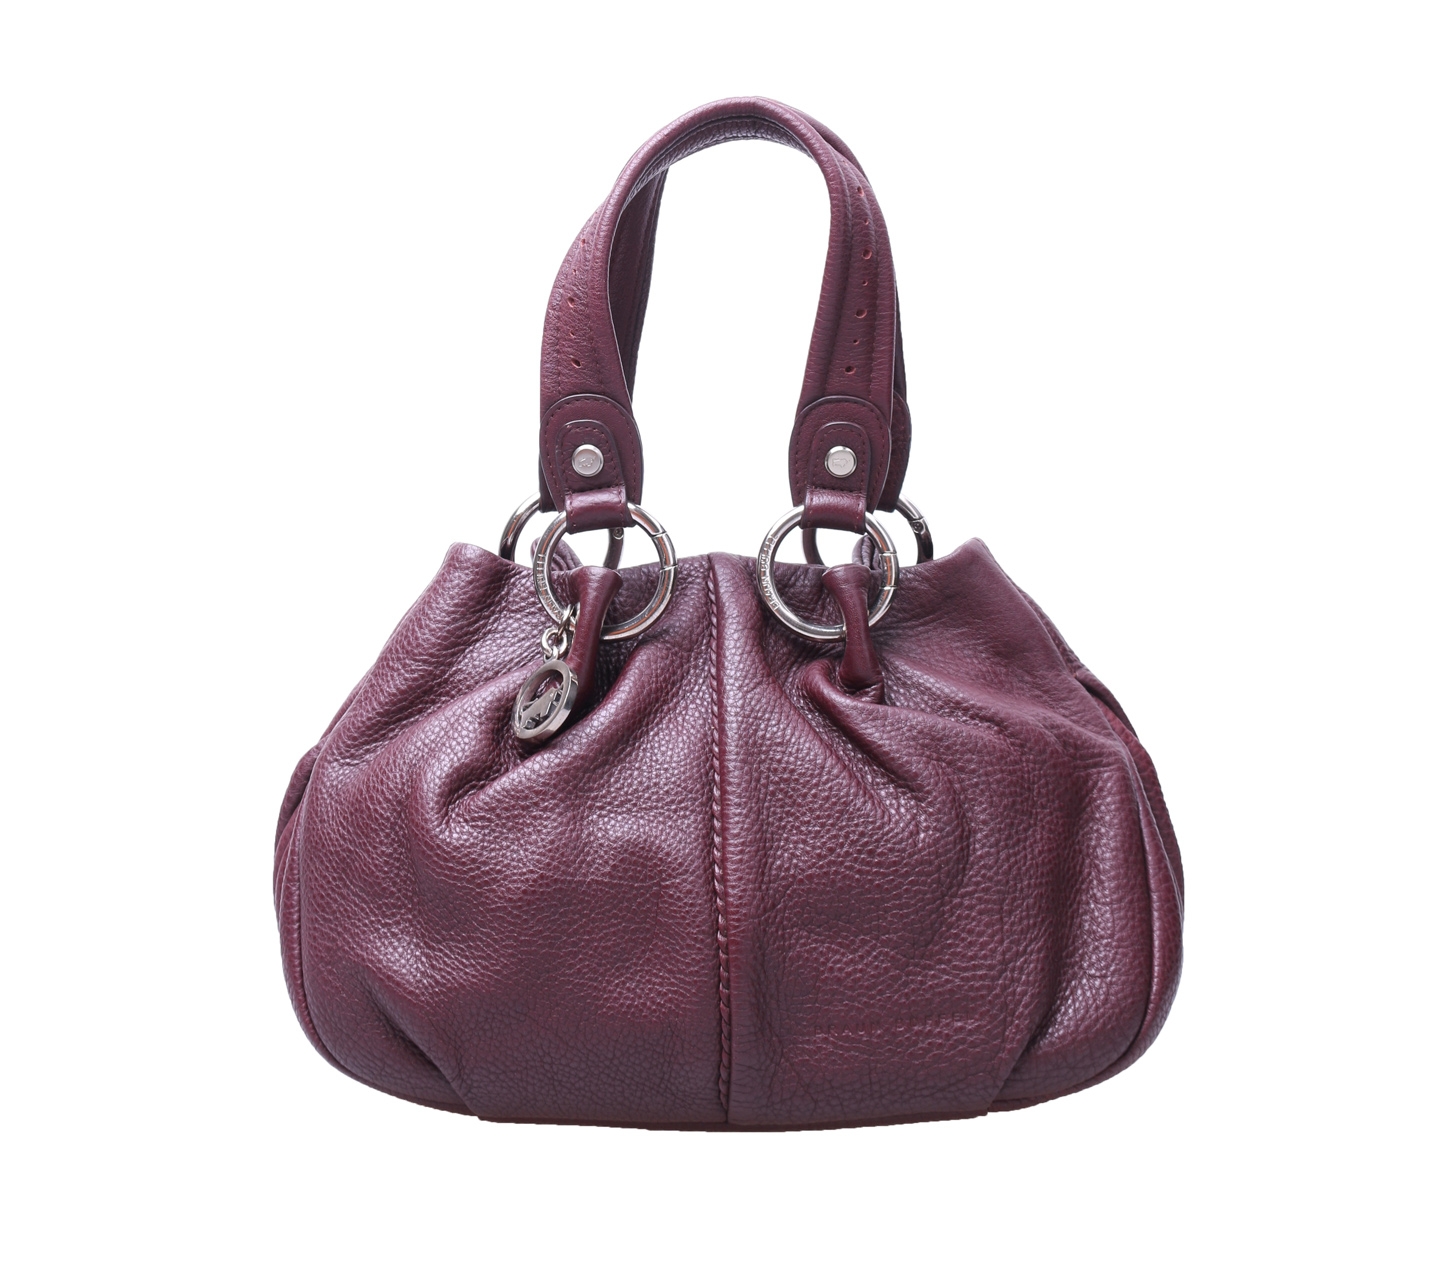 Braun Buffle Burgundy Leather Handbag